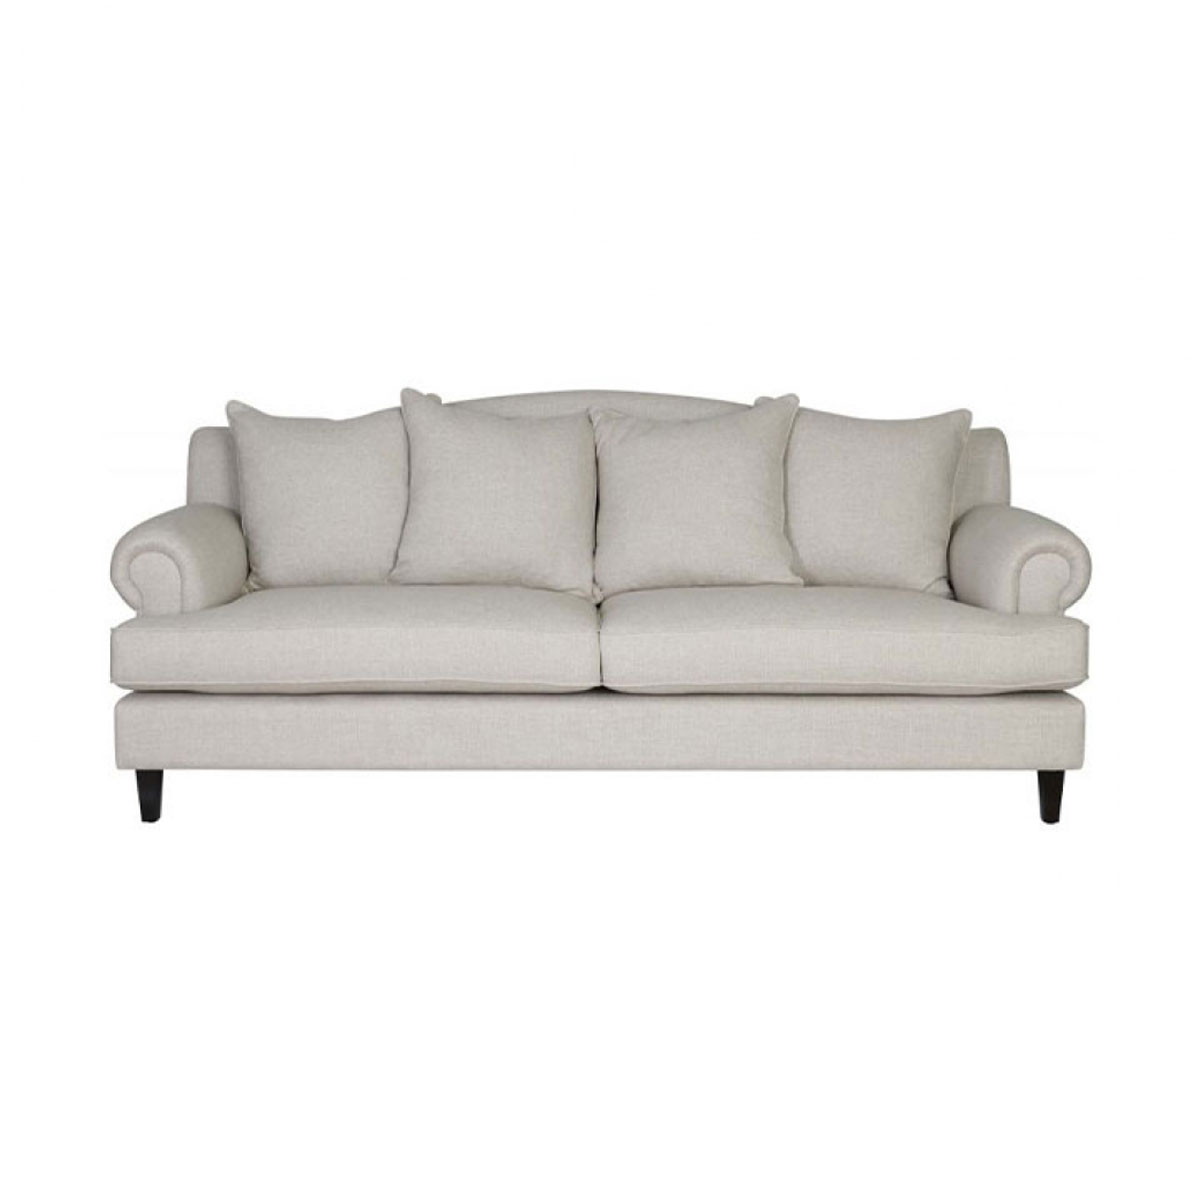 Block & Chisel Yale linen upholstered 3 seater sofa